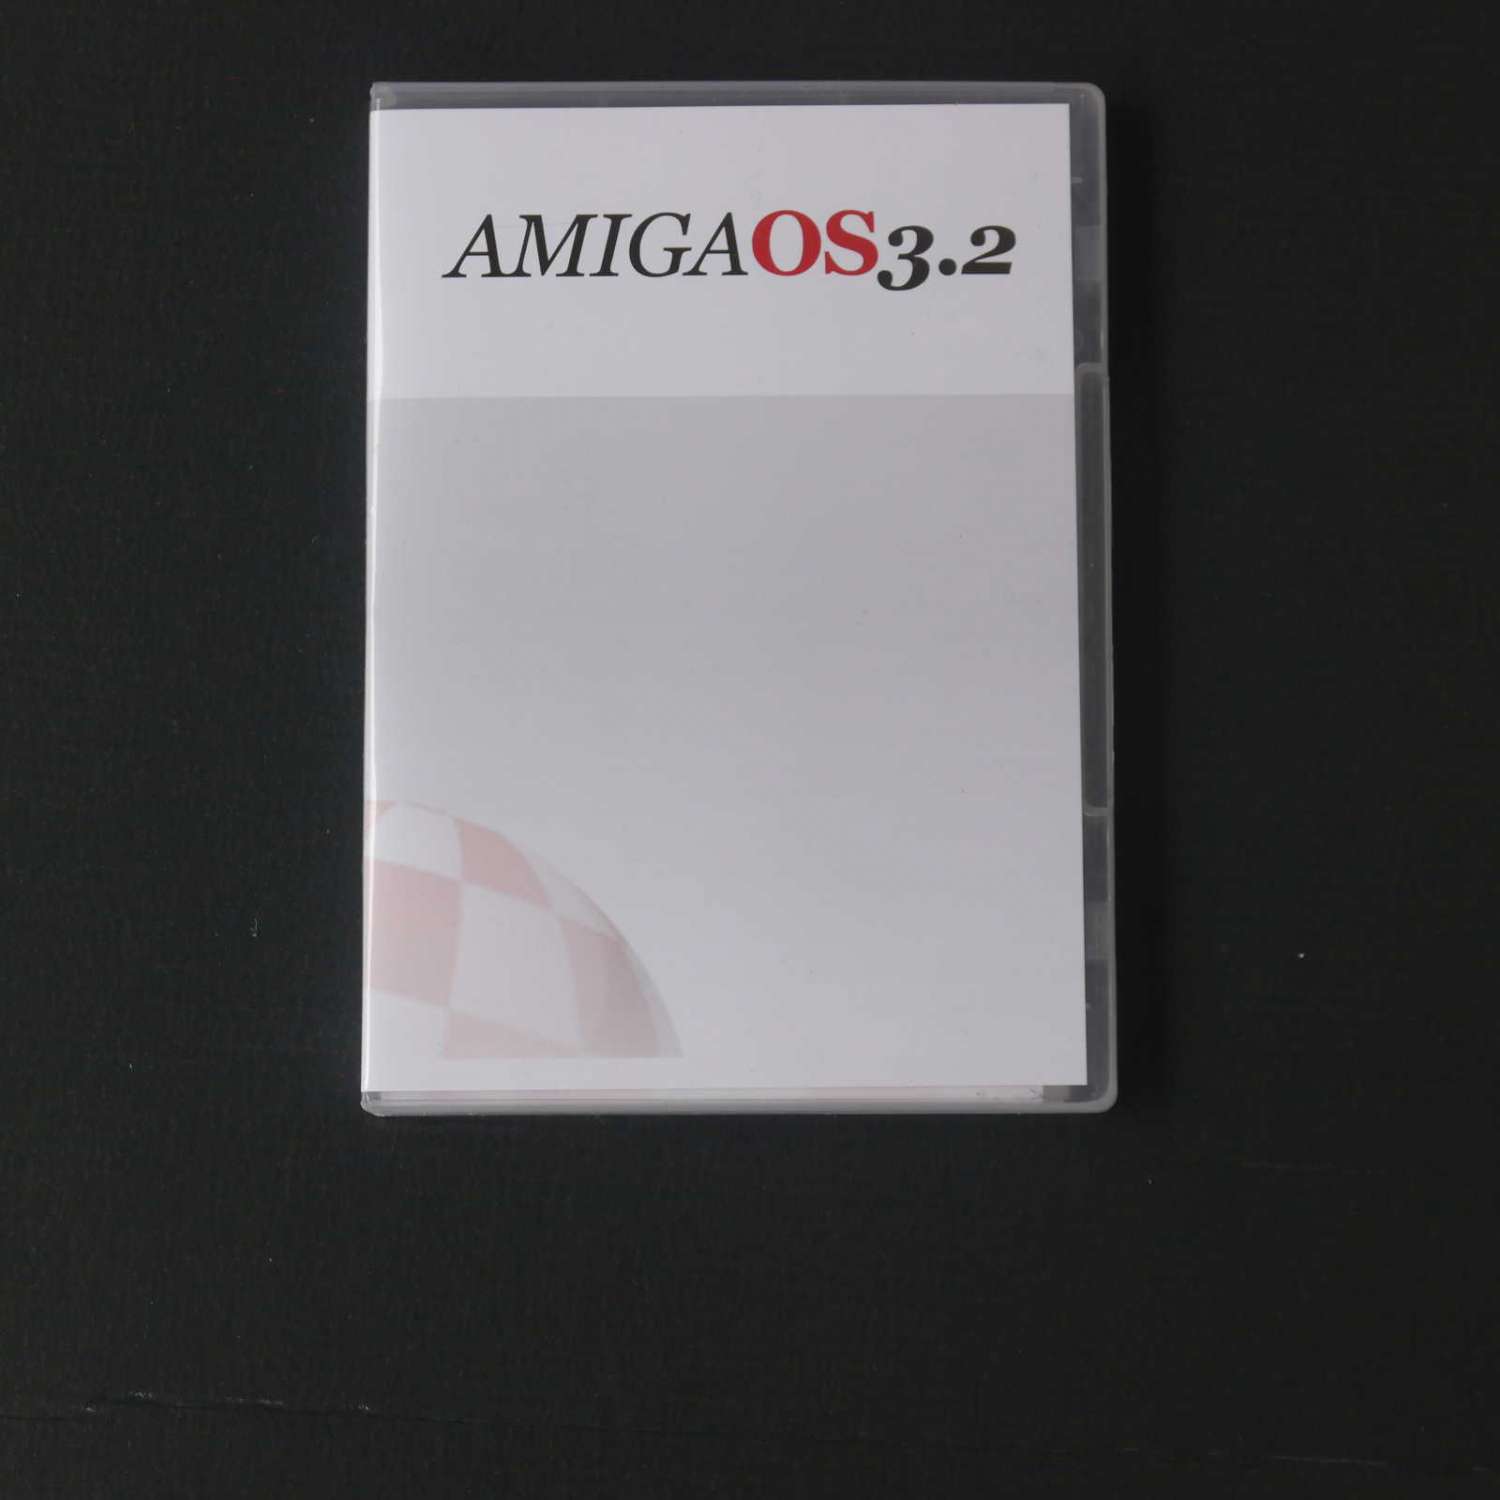 Amiga OS V3.2 CD